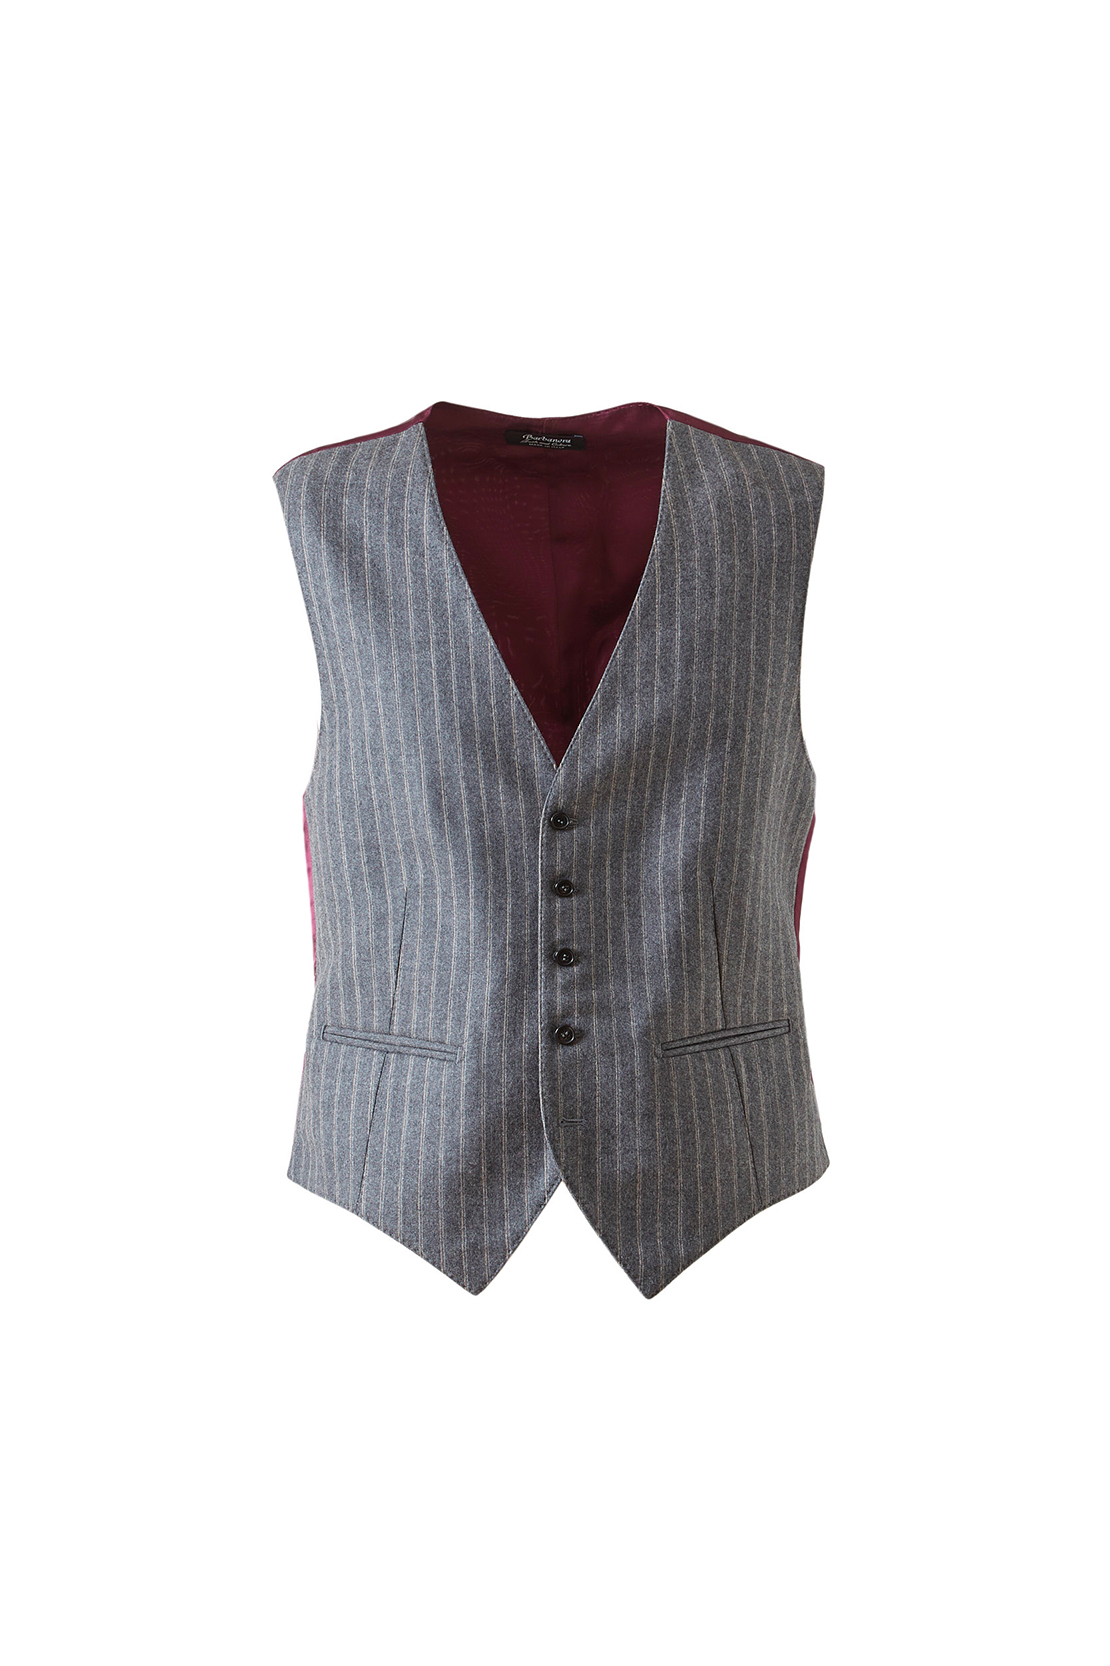 Men's Tweed Suits   Donegal & Herringbone   Moss